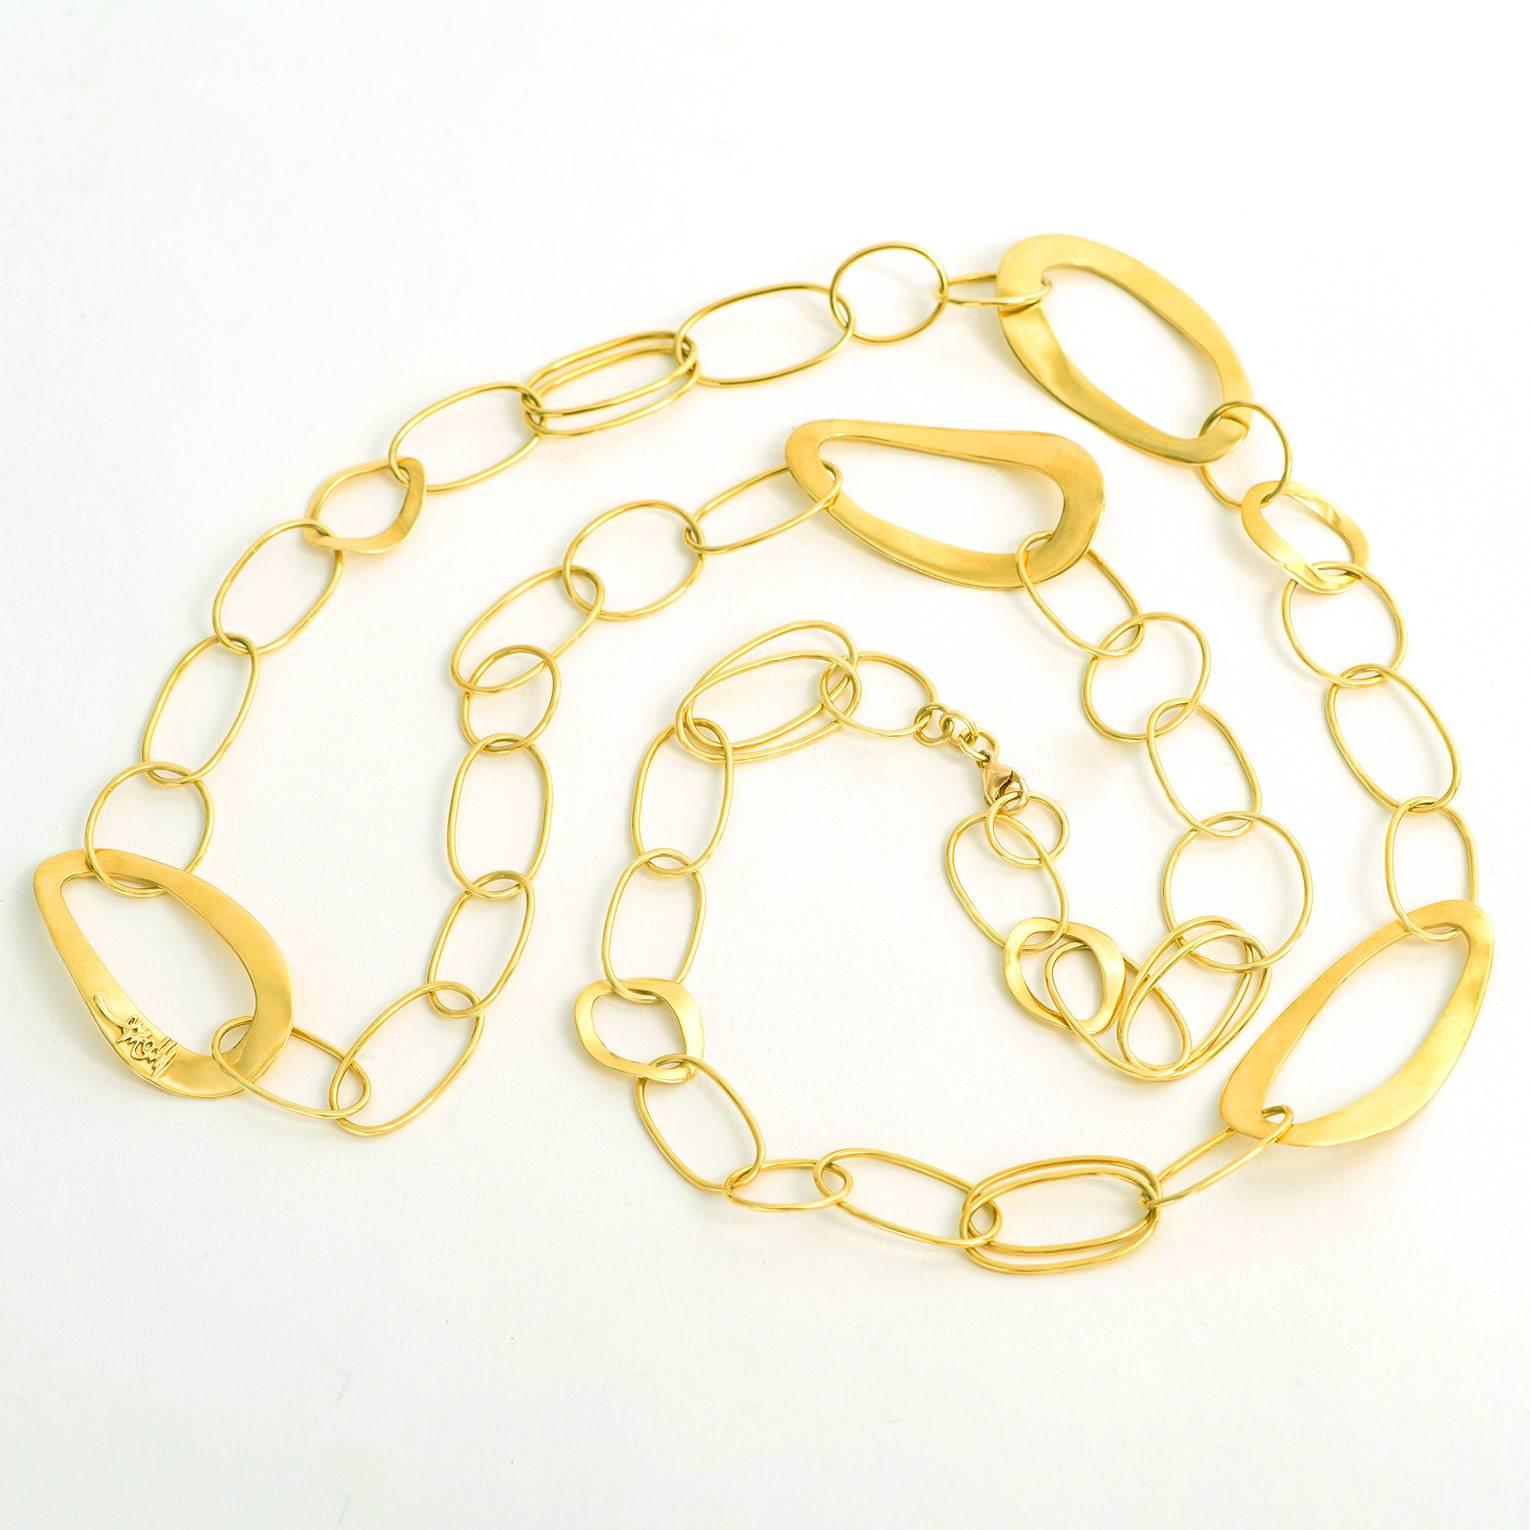 Ippolita Glamazon Gold “Cherish” Chain Necklace 6